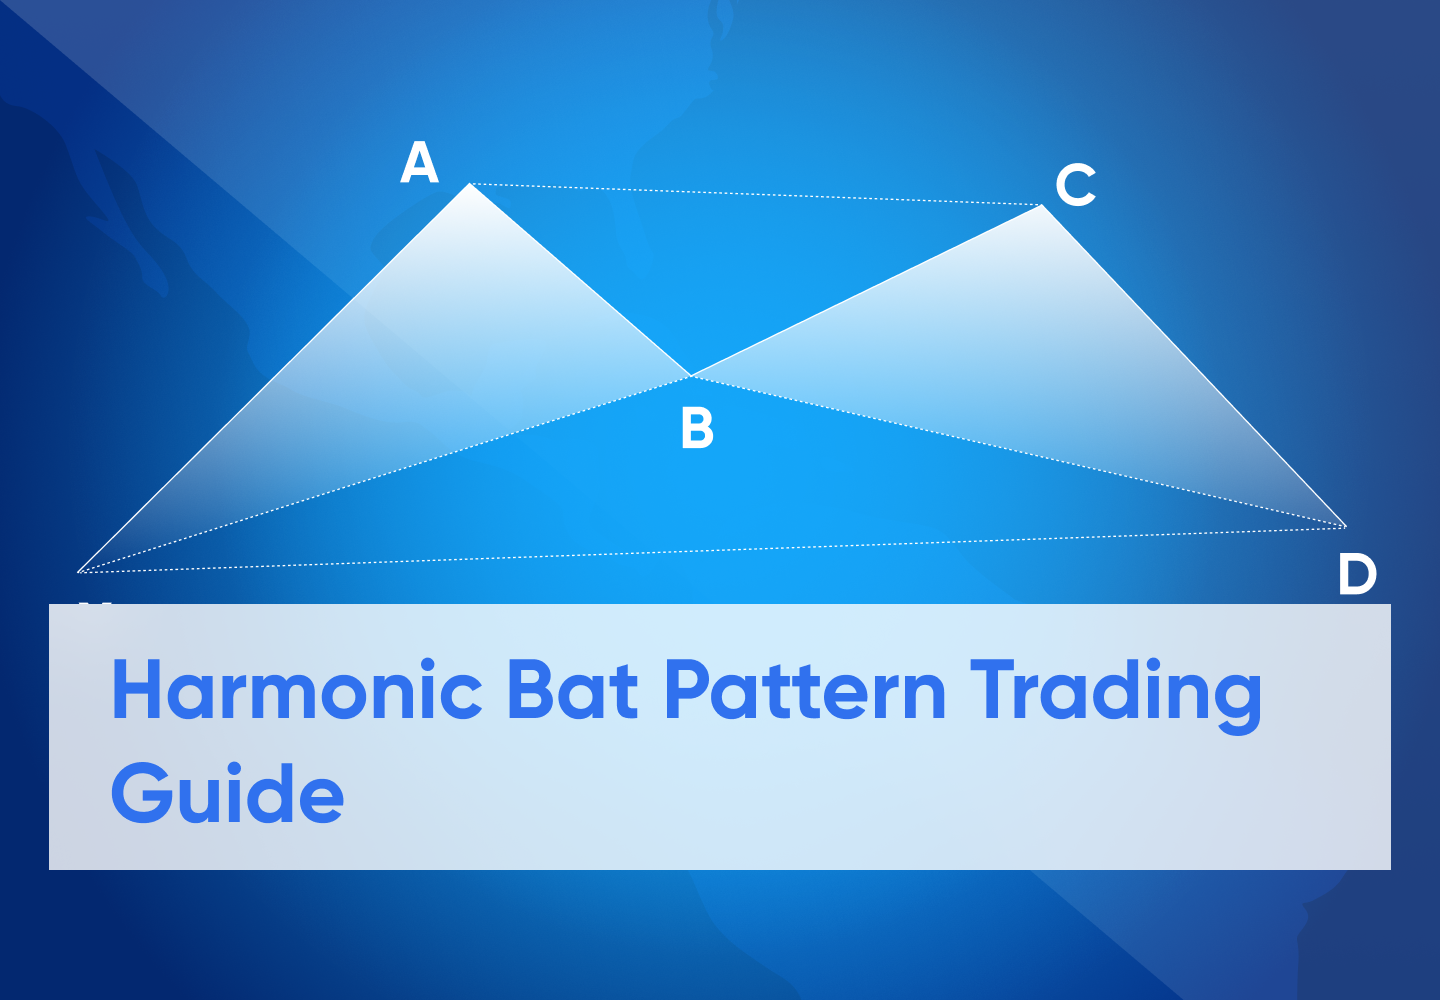 Harmonic Bat Pattern